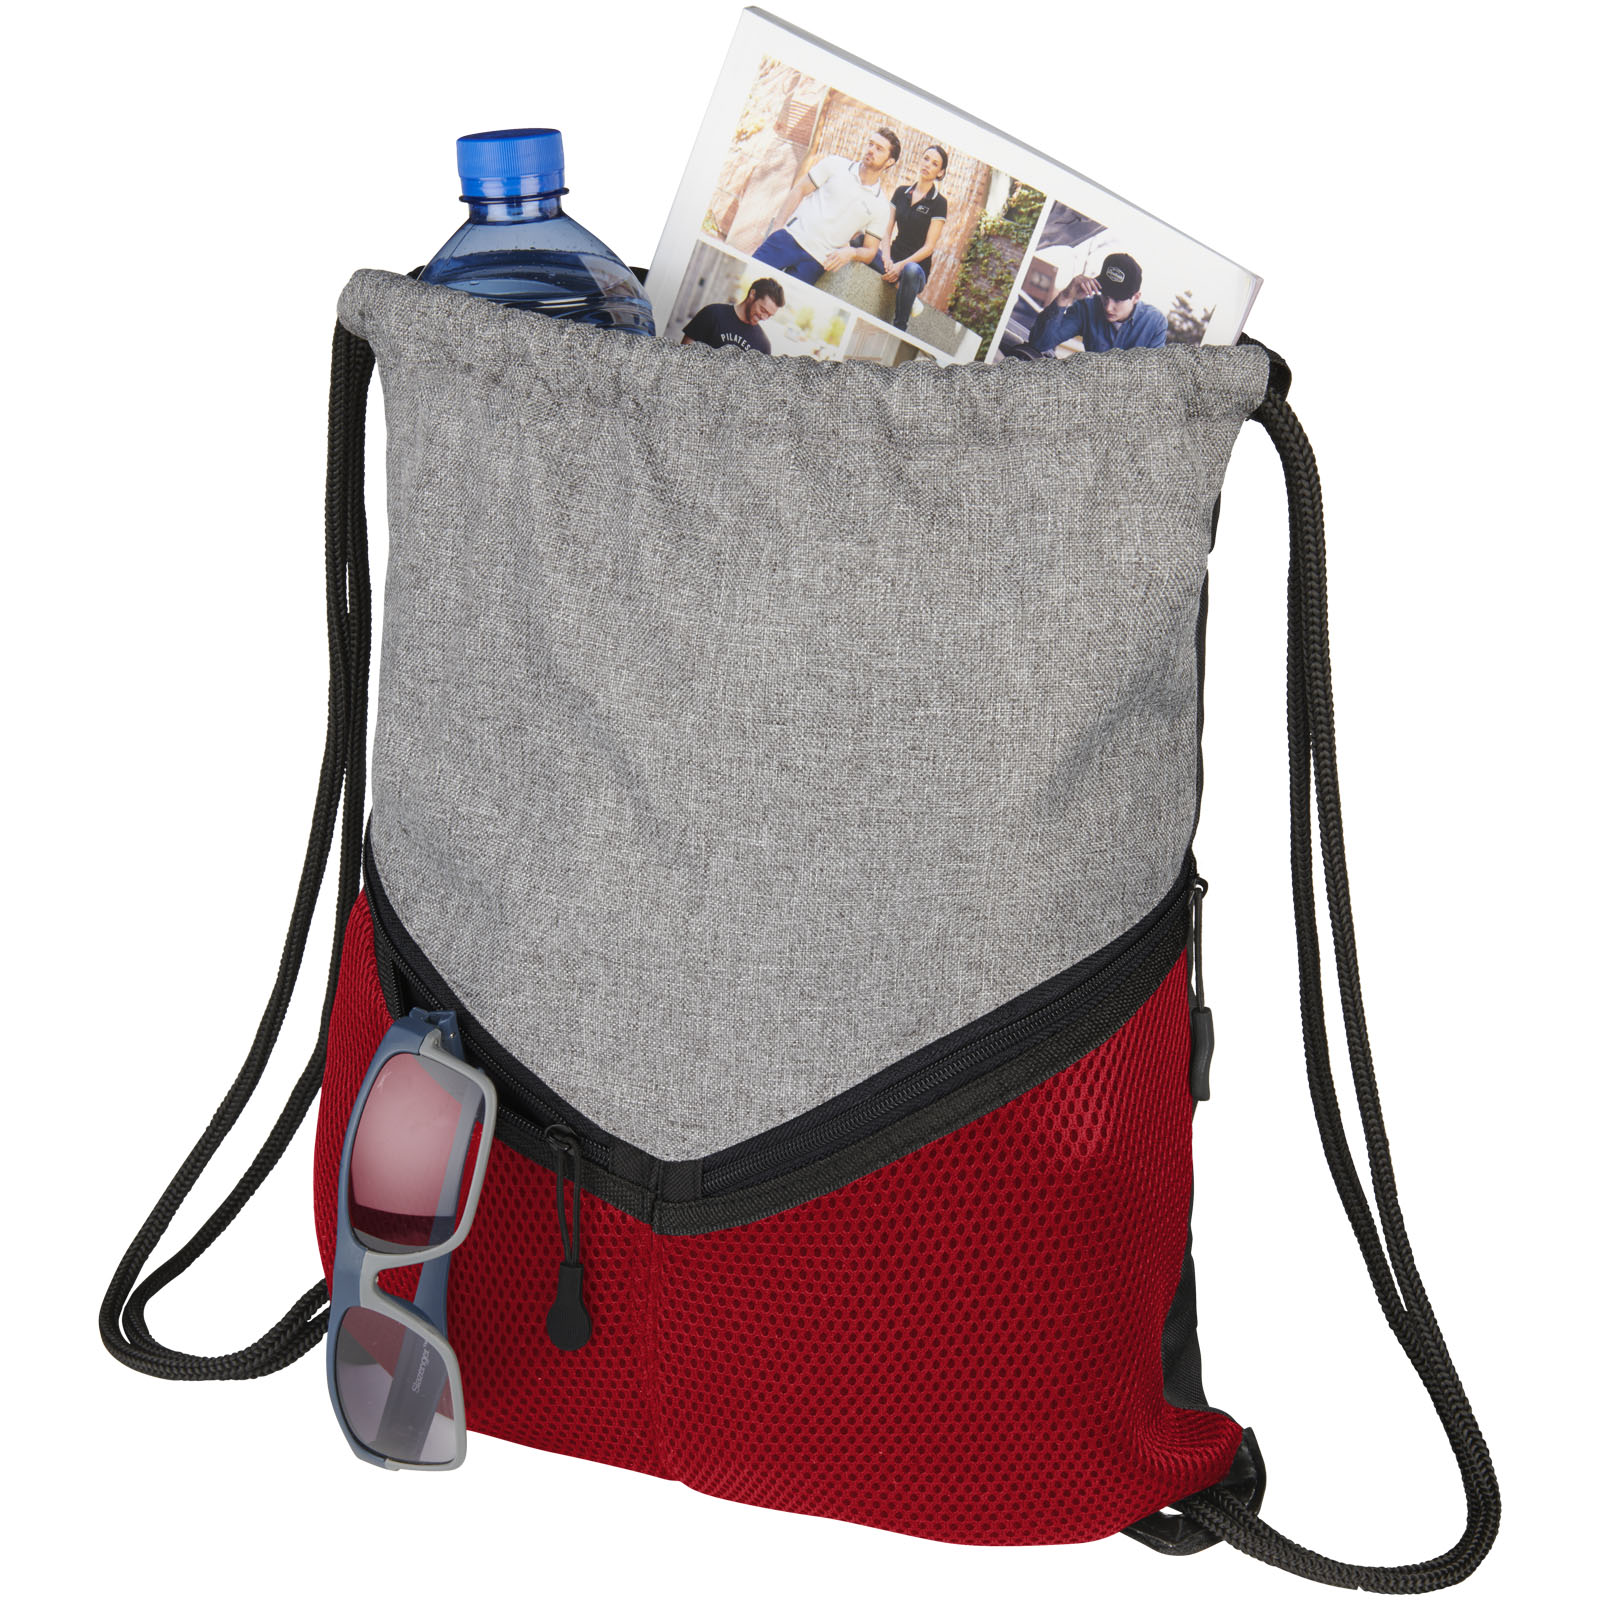 Drawstring Bags - Voyager drawstring backpack 6L